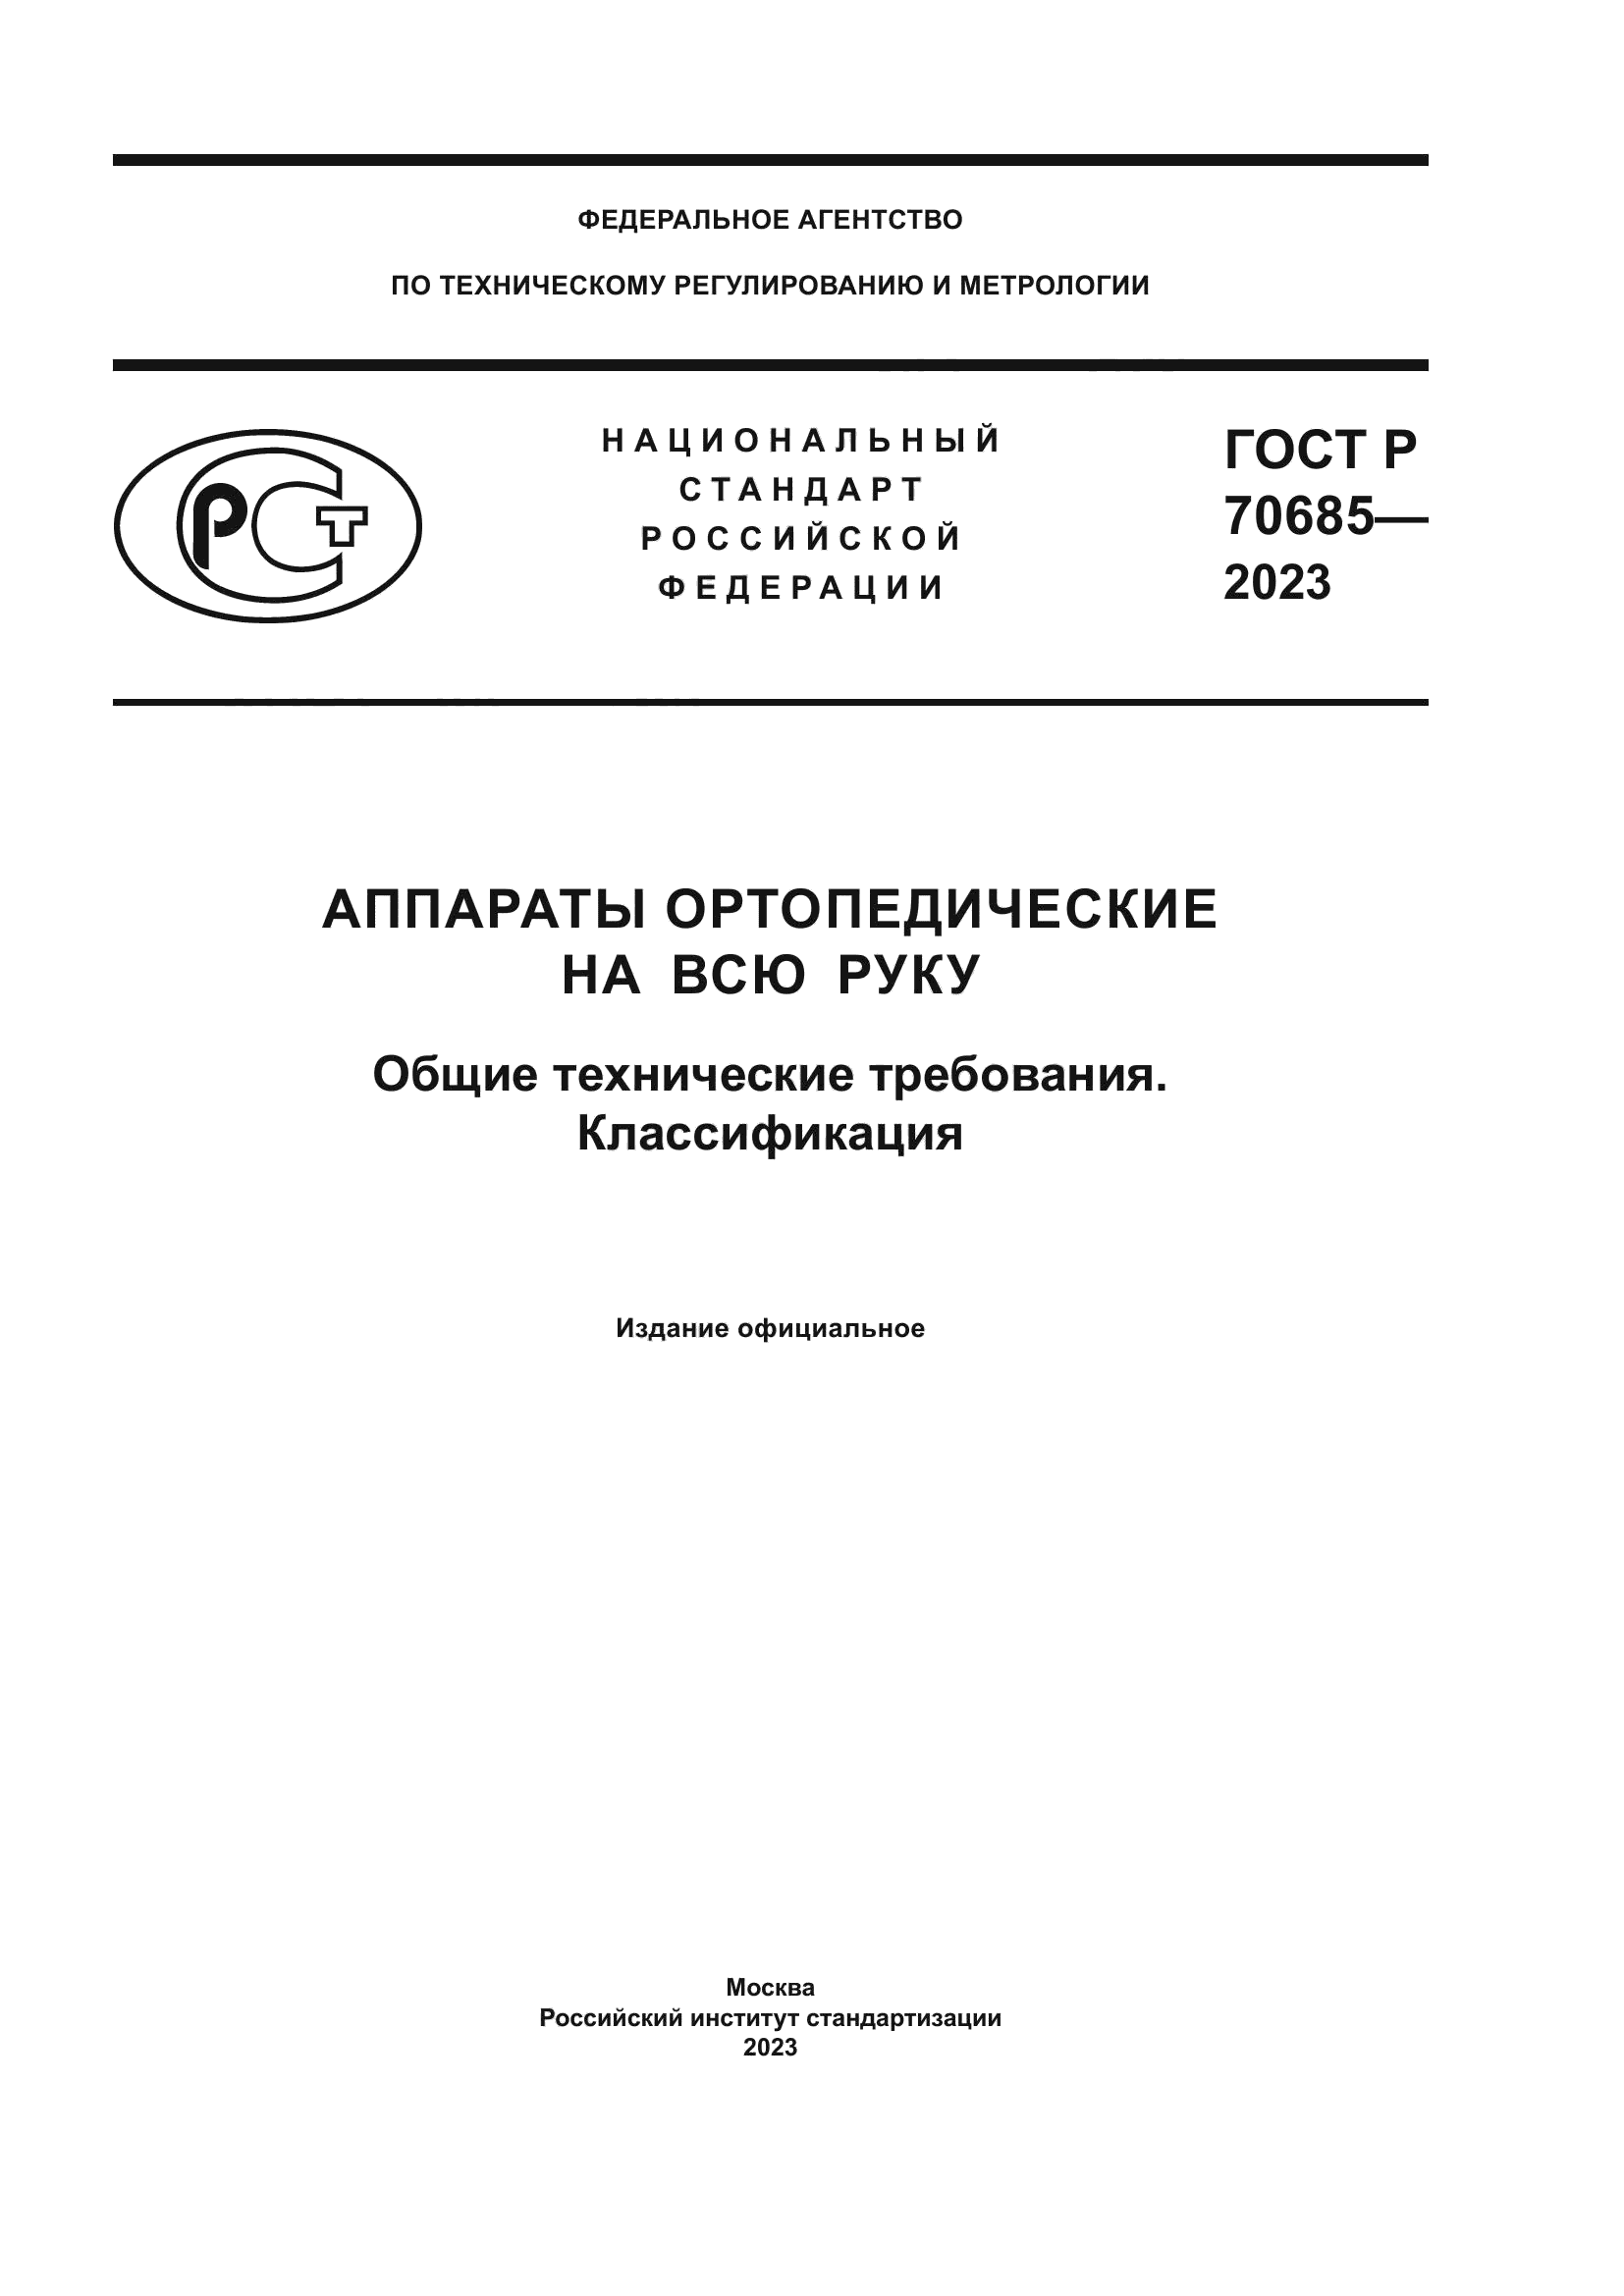 ГОСТ Р 70685-2023